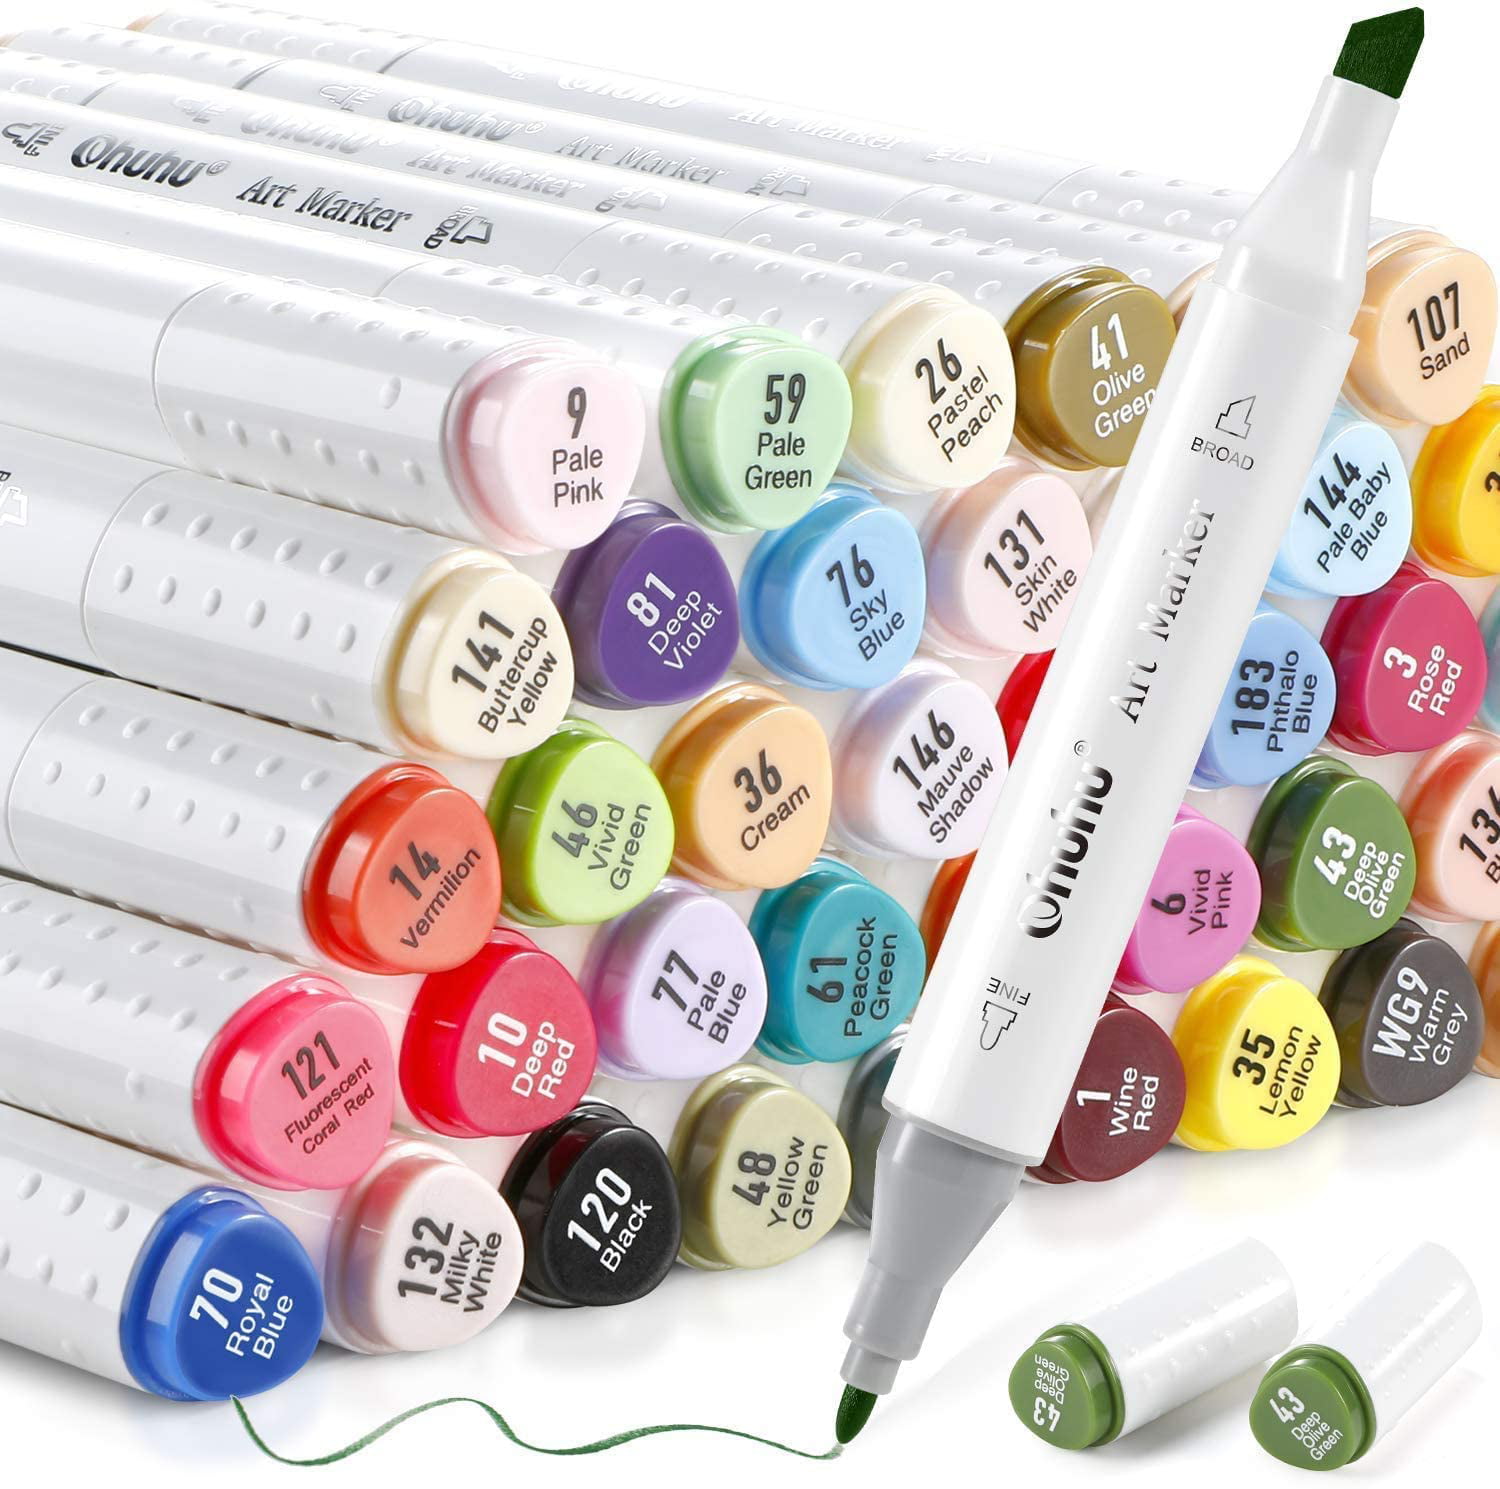 Ohuhu Marker Pen 60 Color Set For Comics With Blender Pen Carrying Case Art pen 